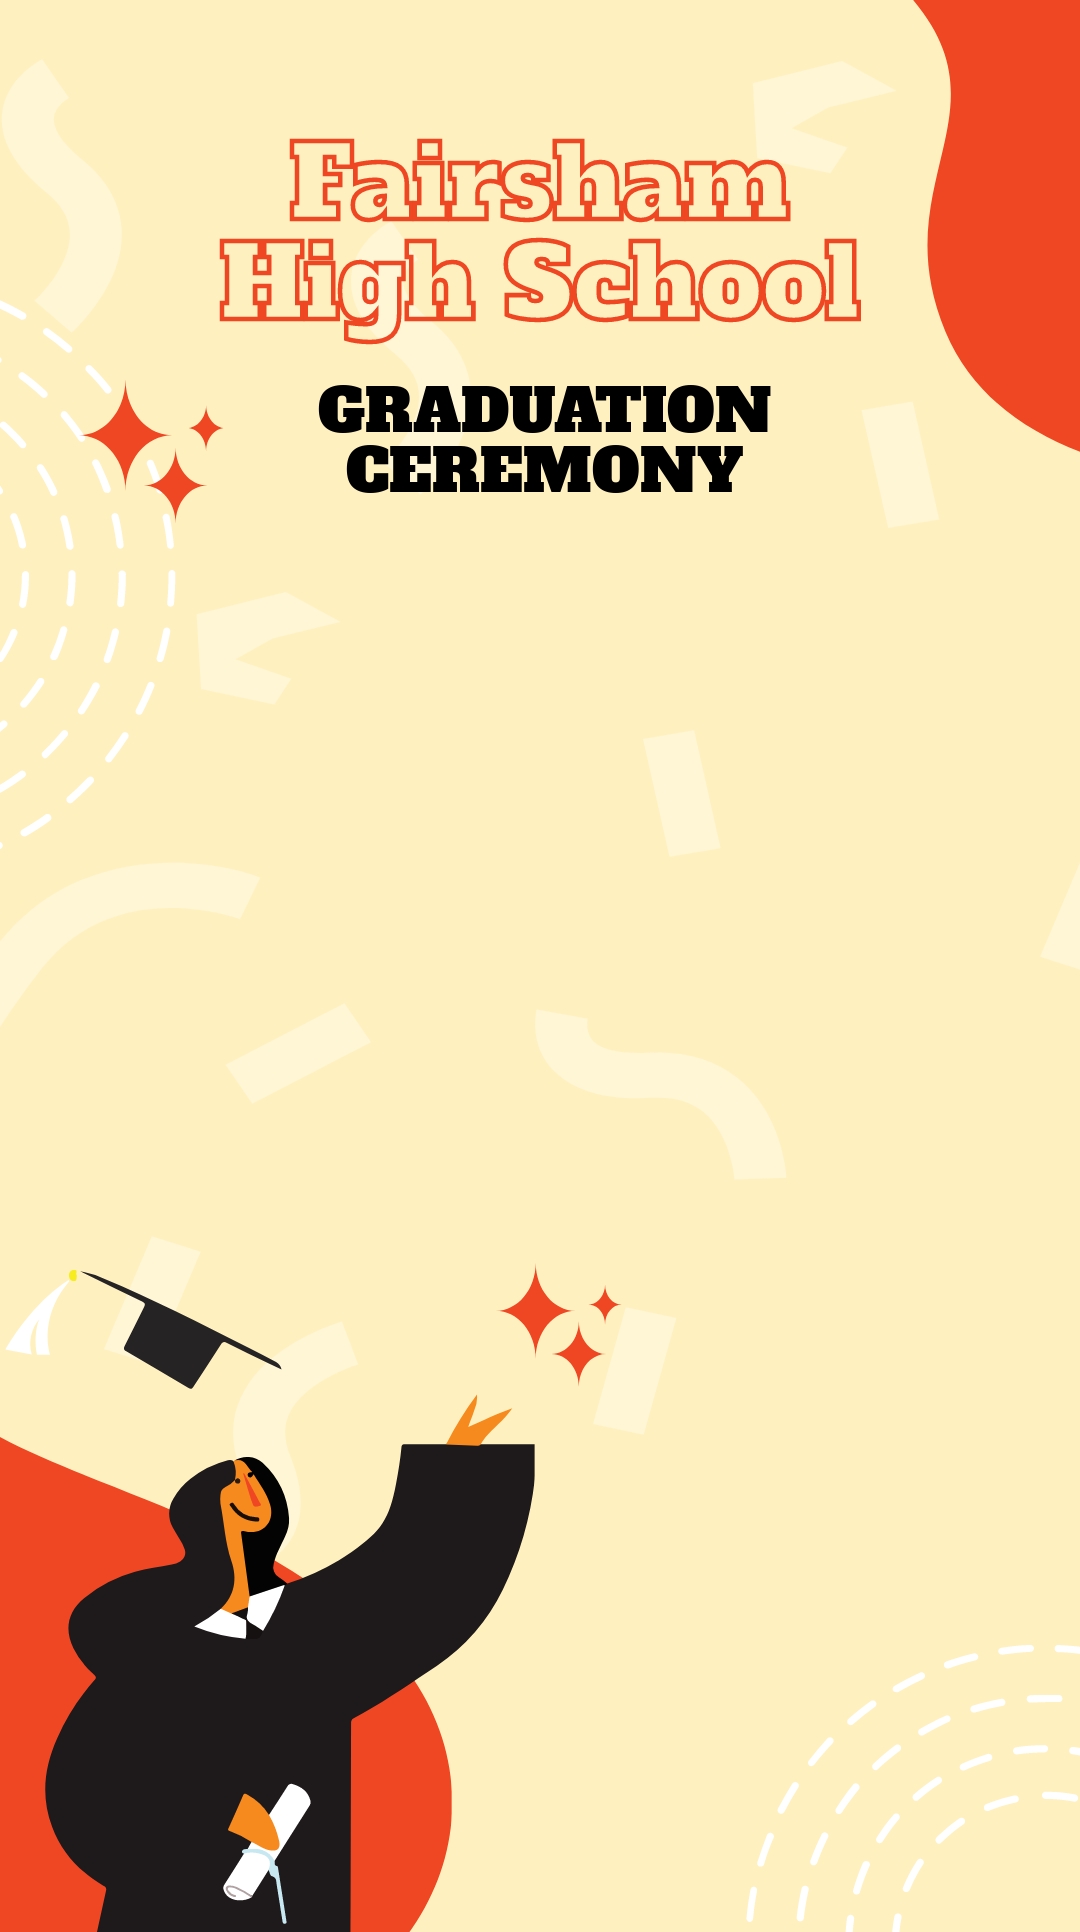 Graduation Ceremony Snapchat Geofilter Template